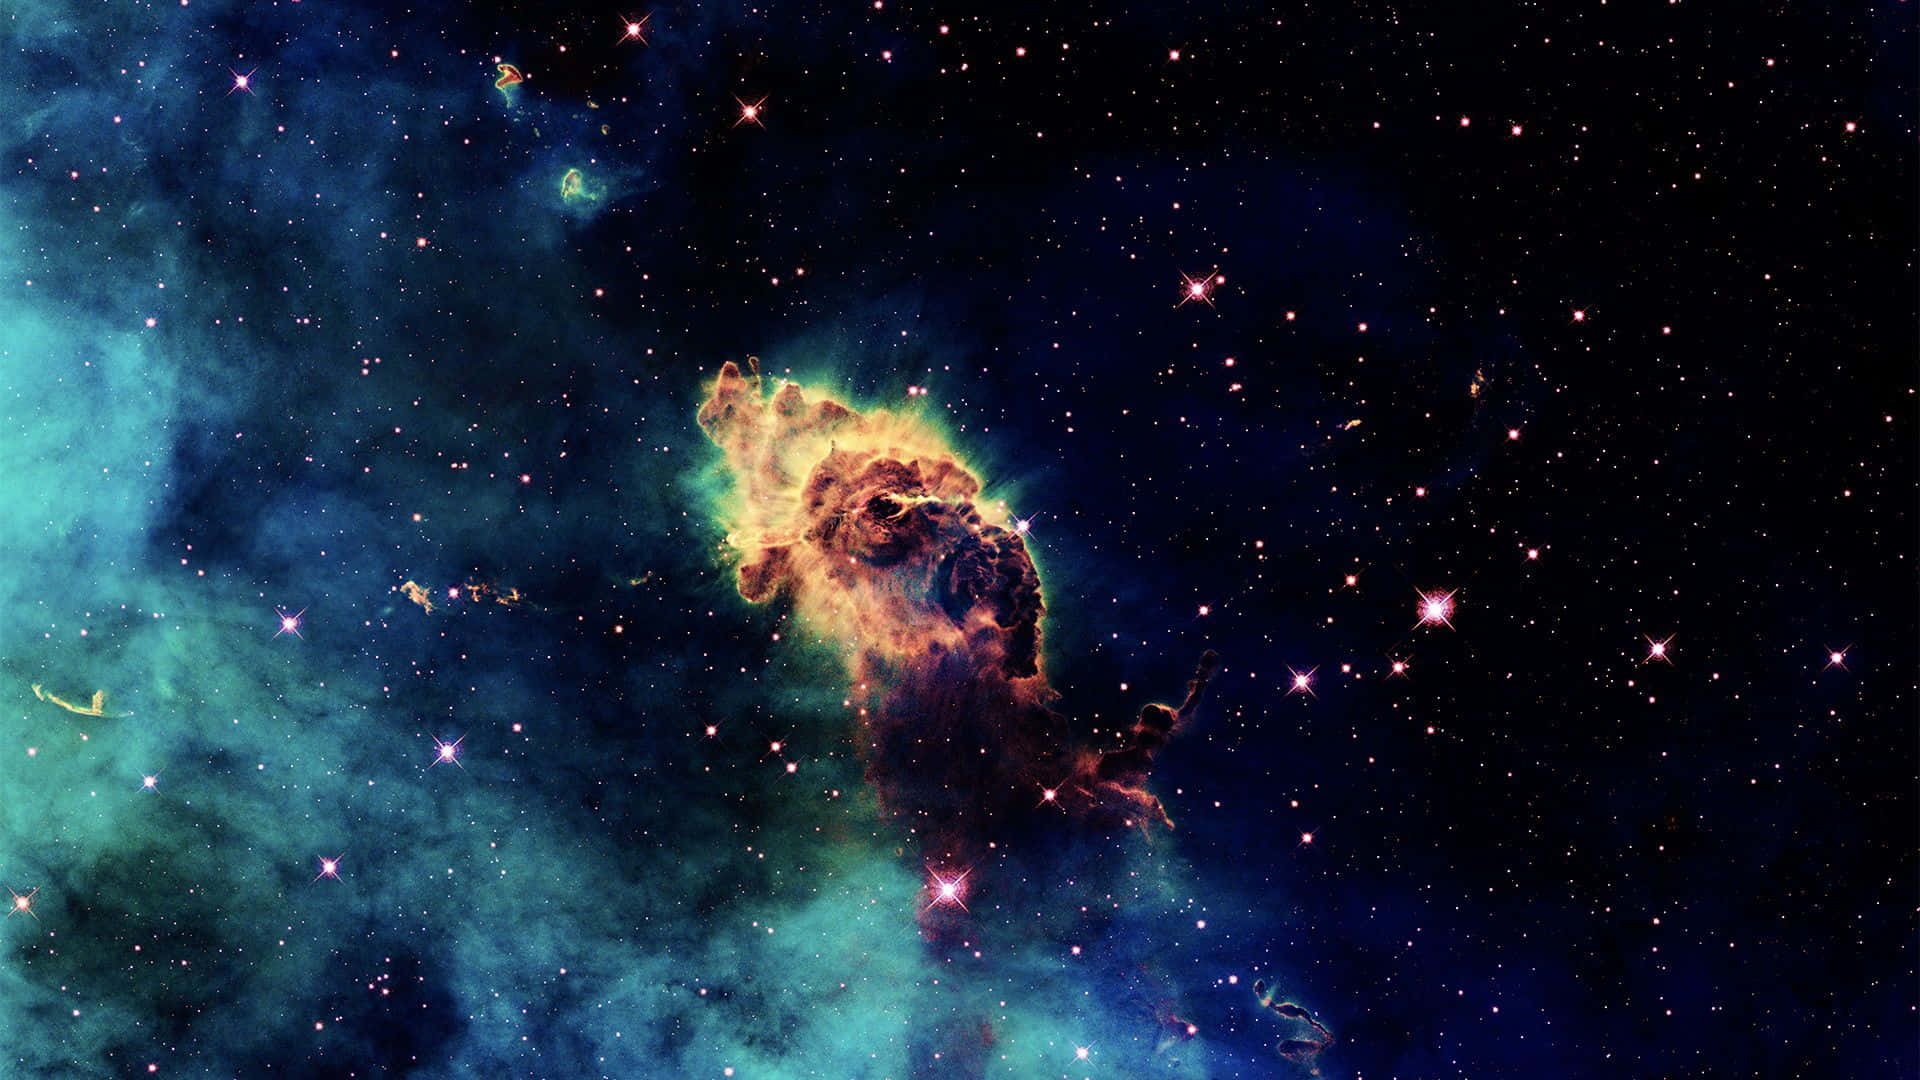 100+] Supernova Explosion Wallpapers